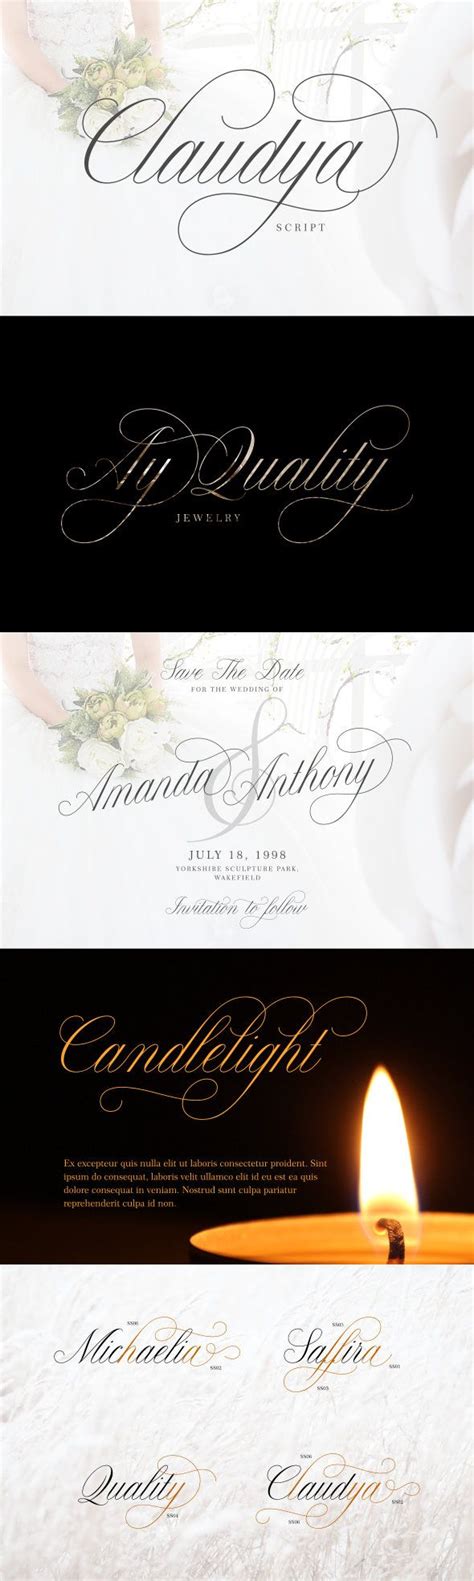 Claudya Script Beautiful Fonts Feminine Invitations Wedding Fonts